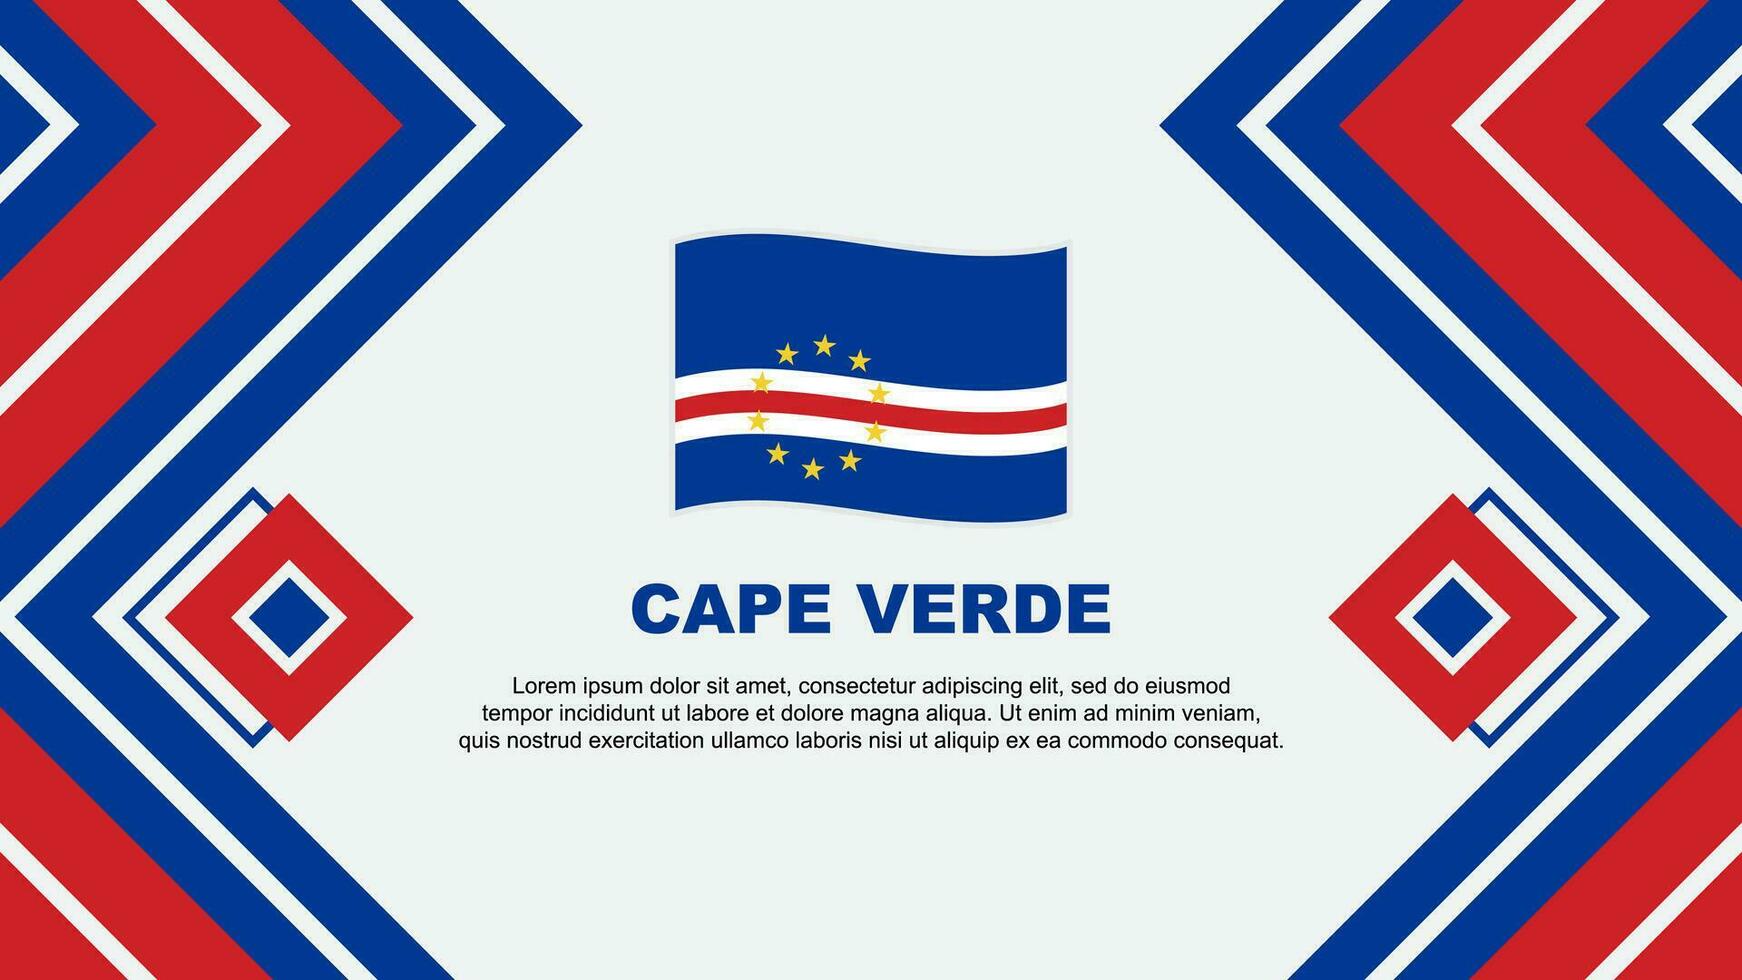 Cape Verde Flag Abstract Background Design Template. Cape Verde Independence Day Banner Wallpaper Vector Illustration. Cape Verde Design